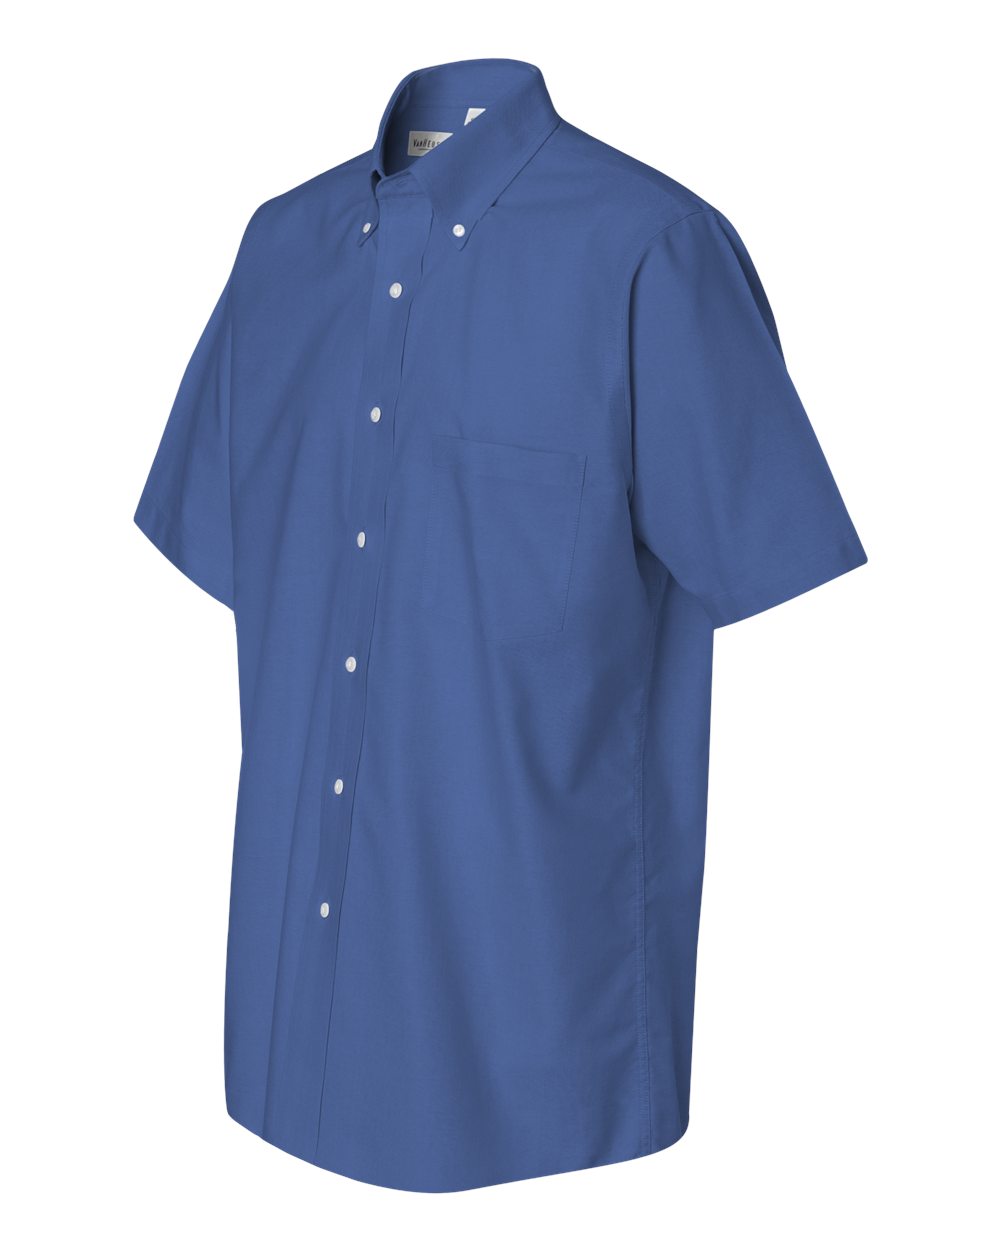 Van Heusen - Short Sleeve Oxford Shirt - 13V0042